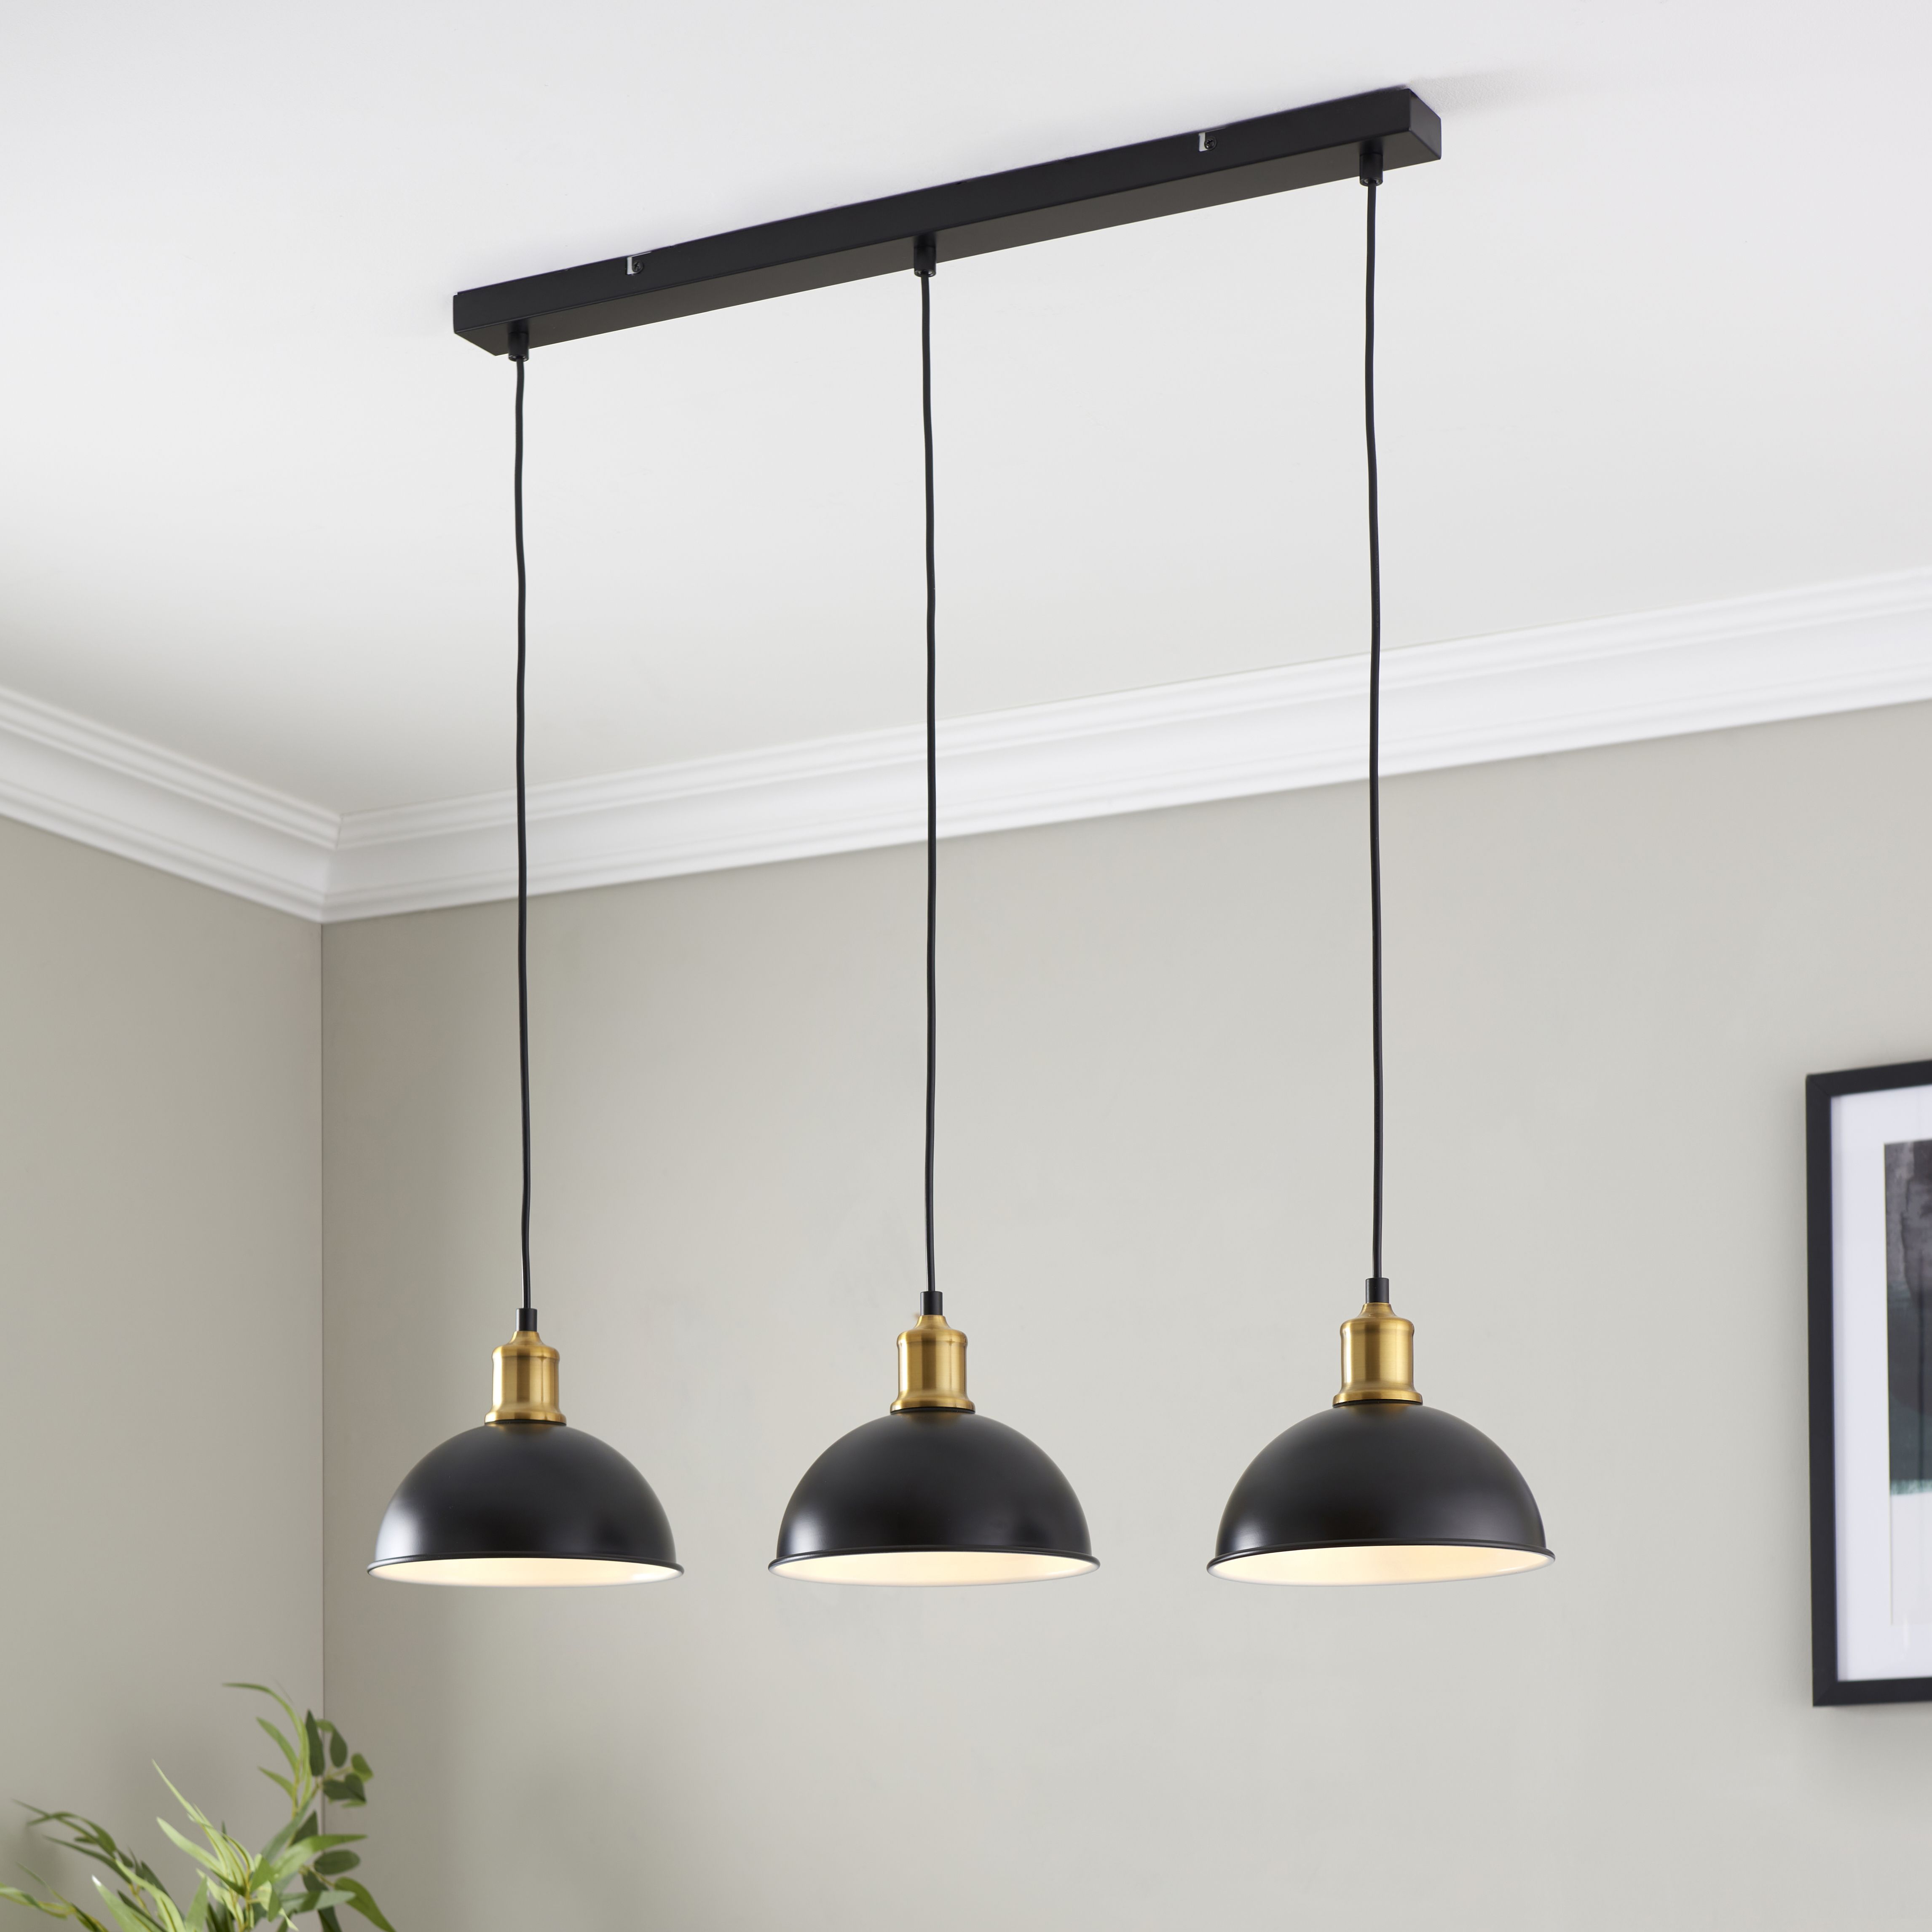 Acrobat Matt Gold effect 3 Lamp LED Pendant ceiling light | DIY at B&Q